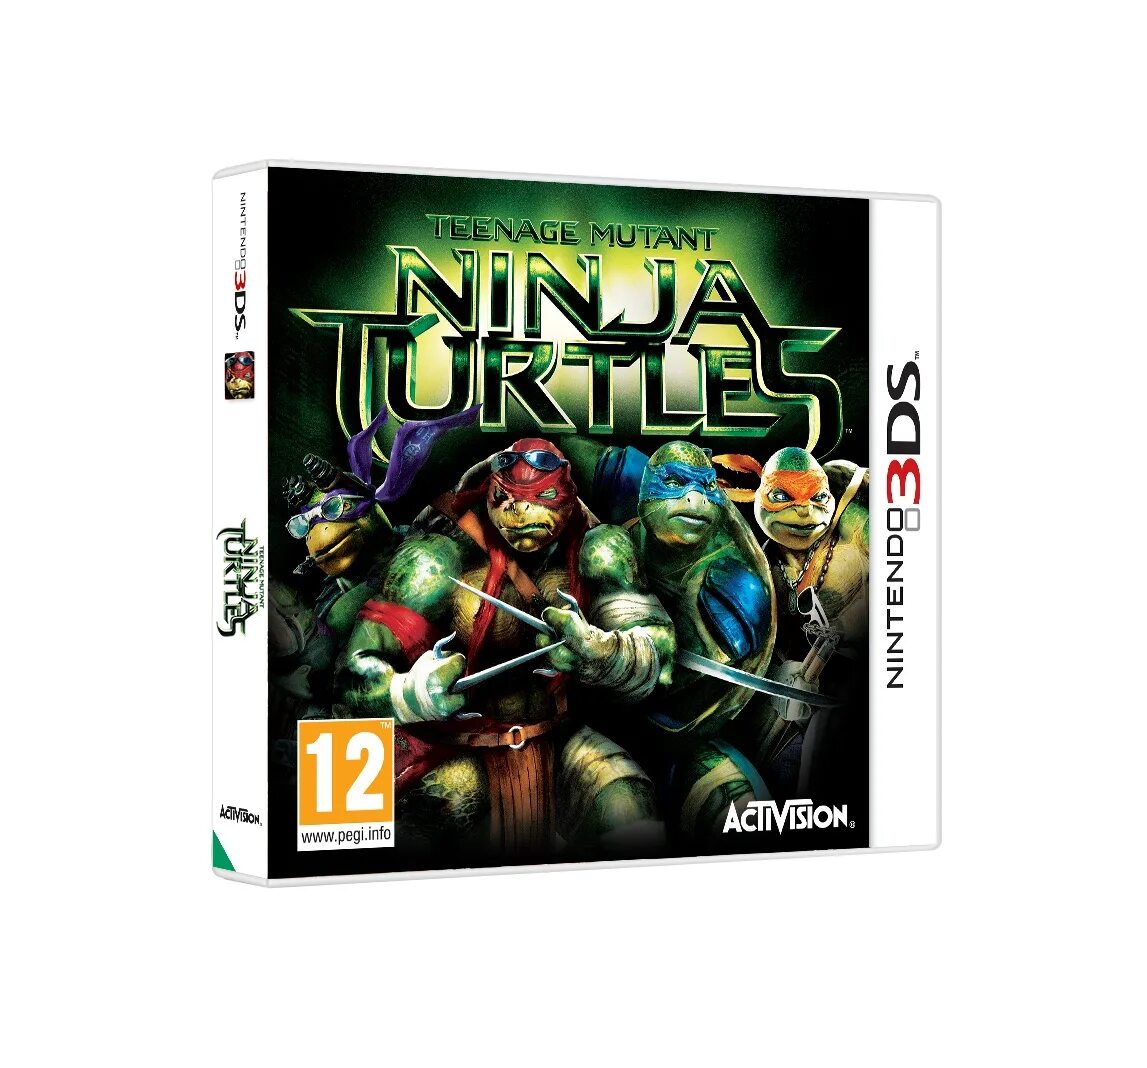 Черепашки ниндзя список игр. TMNT - teenage Mutant Ninja Turtles 3 игра. Teenage Mutant Ninja Turtles 3ds. Teenage Mutant Ninja Turtles игра 2013 Xbox 360. Teenage Mutant Ninja Turtles игра 2013 Nintendo 3ds.